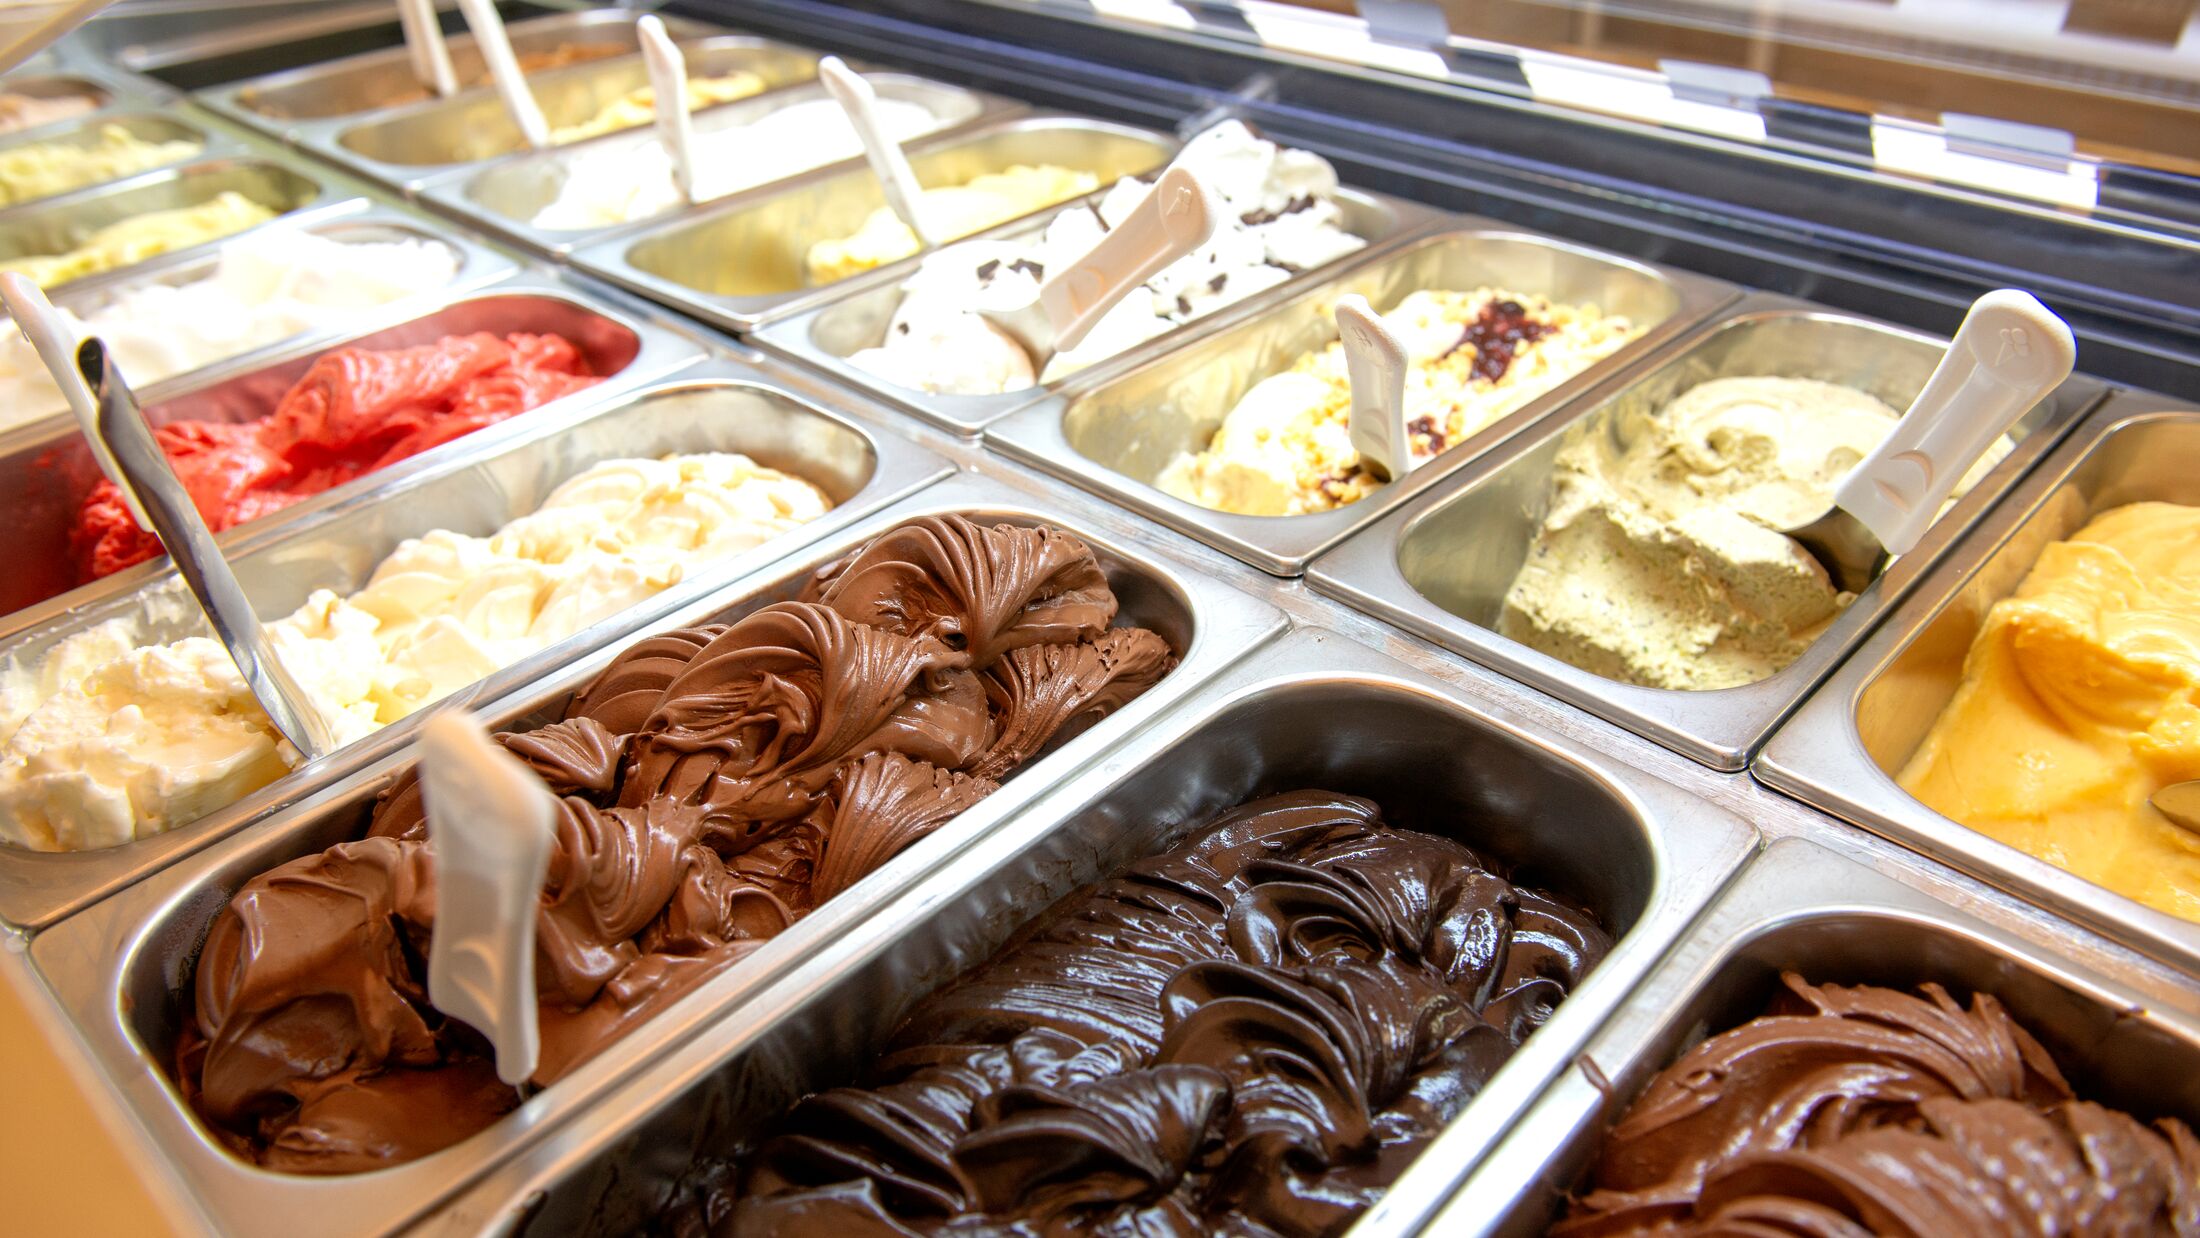 various italian gelato ice cream flavours in modern shop display window